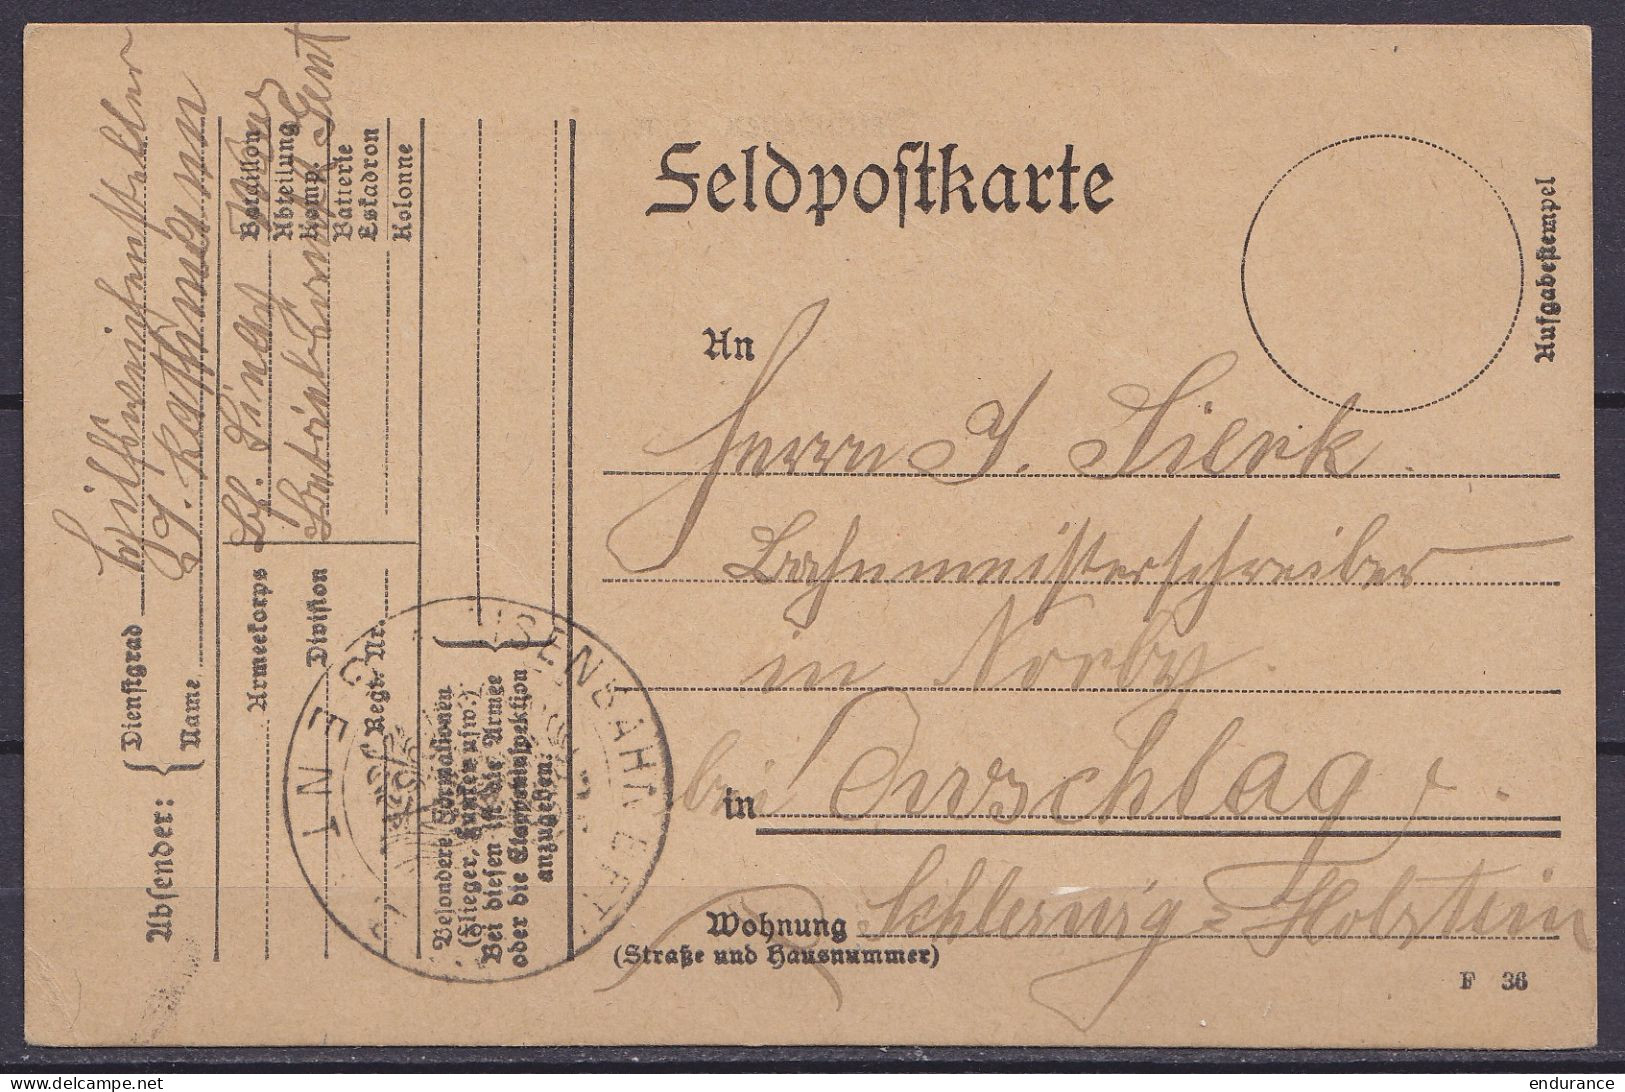 CP Feldposkarte Datée 17 Septembre 1915 De GAND Pour OWSCHLAG (Schleswig-Holstein) - Armée Allemande